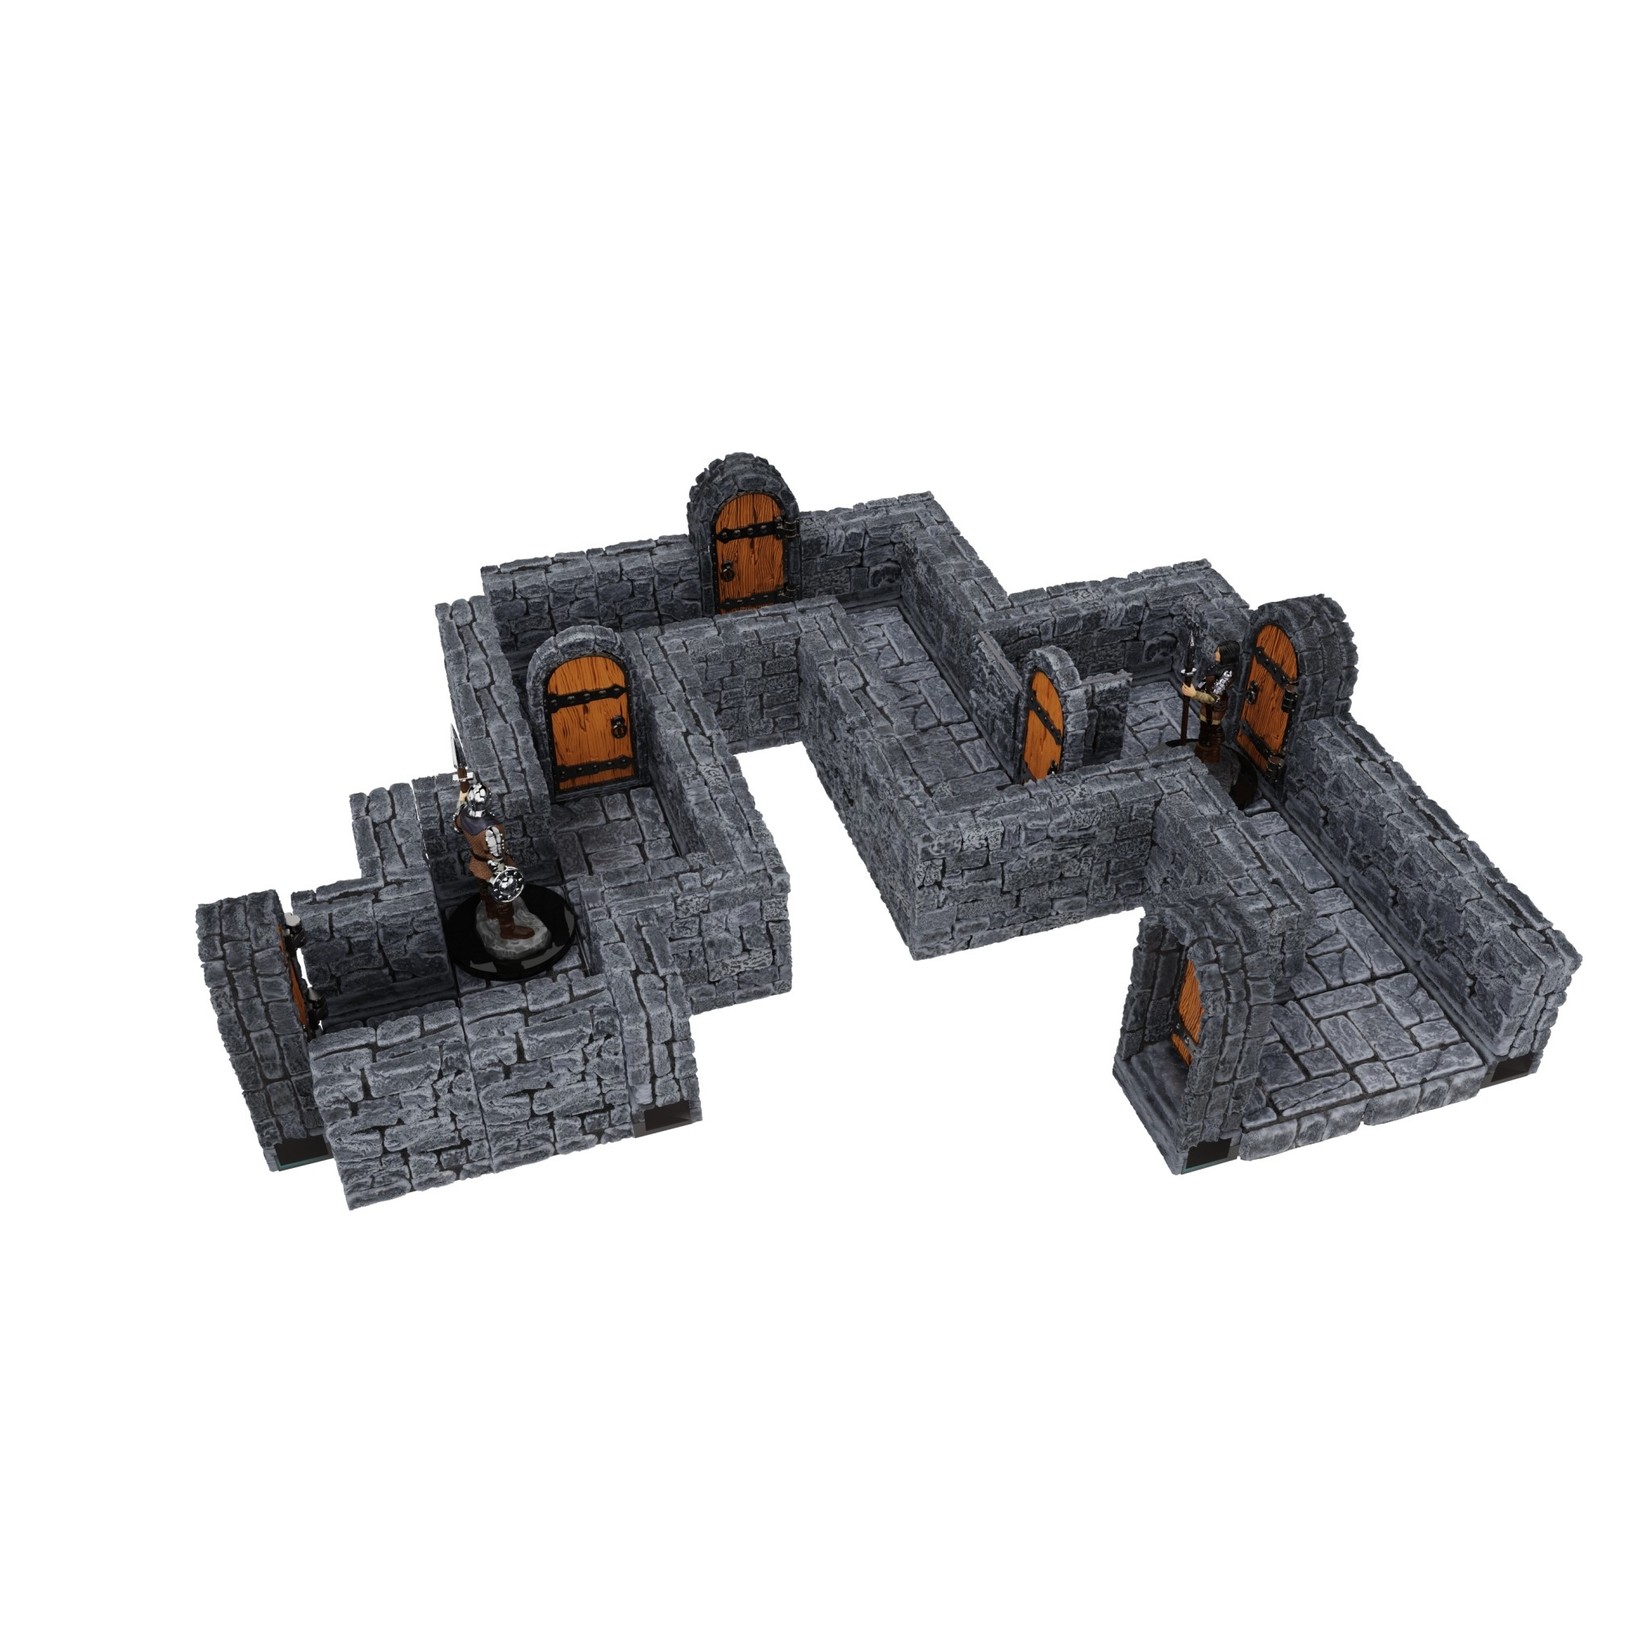 WIZKIDS/NECA WarLock Tiles: Expansion Pack - 1in Dungeon Straight Walls